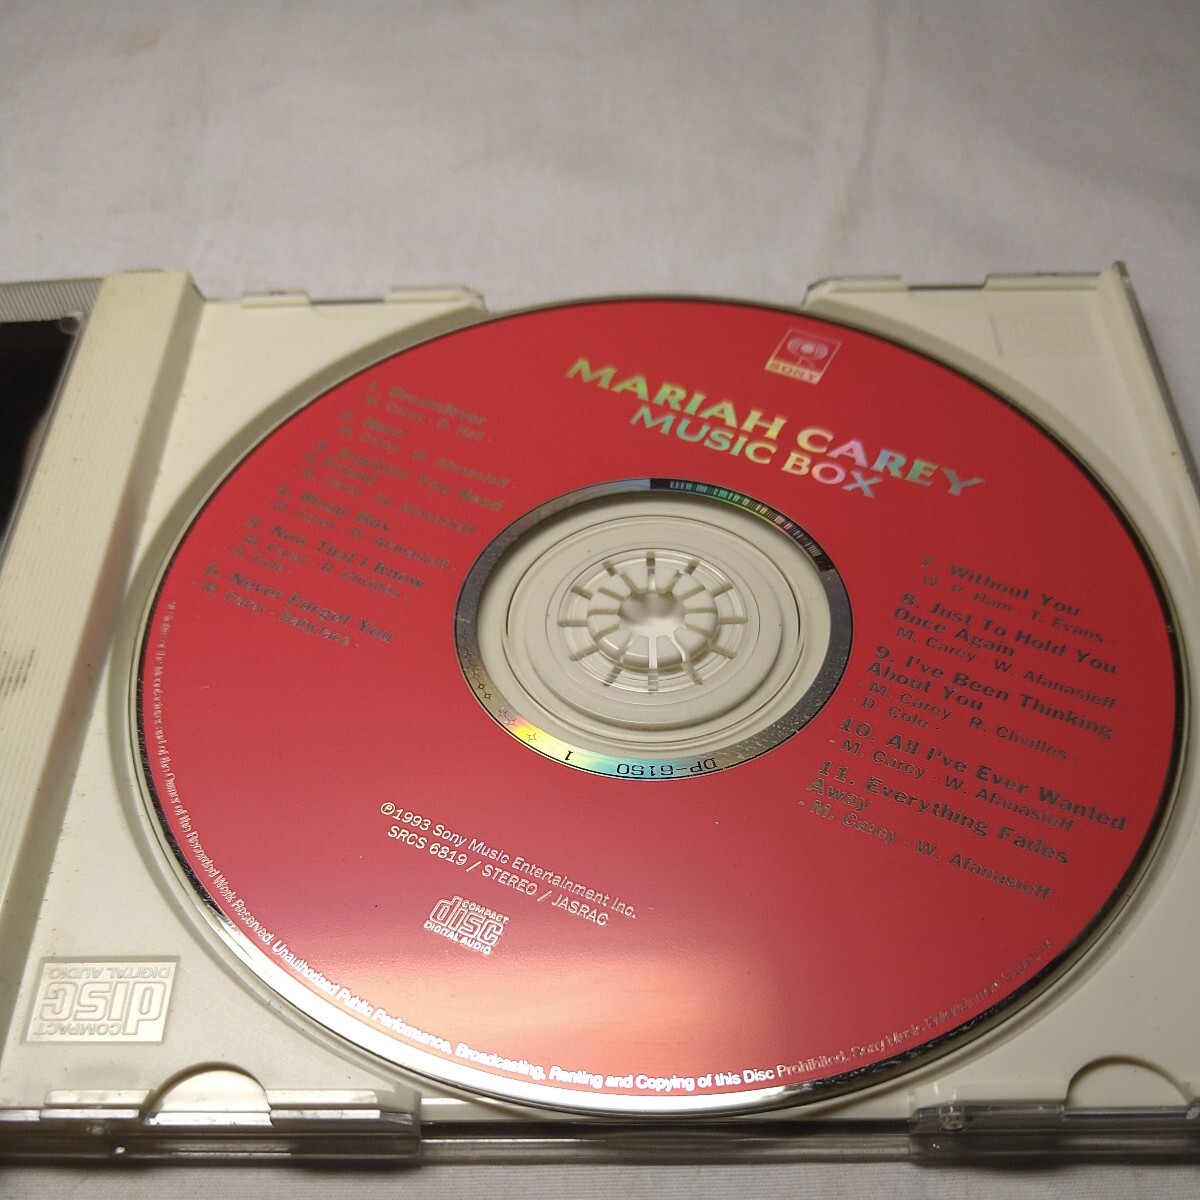 n-1434◆ マライア キャリー/ ミュージック ボックス MARIAH CAREY CD/日本盤 中古盤 再生未確認 ◆状態は画像で確認してください_画像5